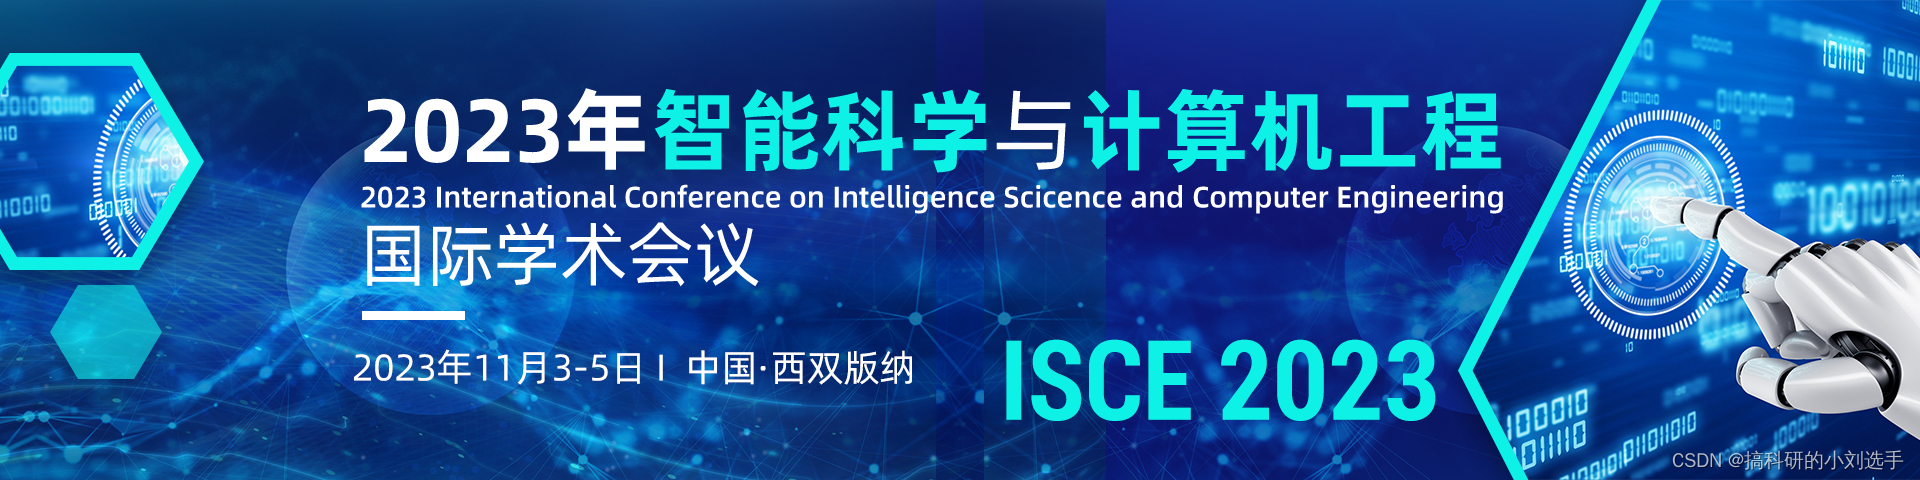 【EI会议征稿】2023年智能科学与计算机工程国际学术会议（ISCE 2023）